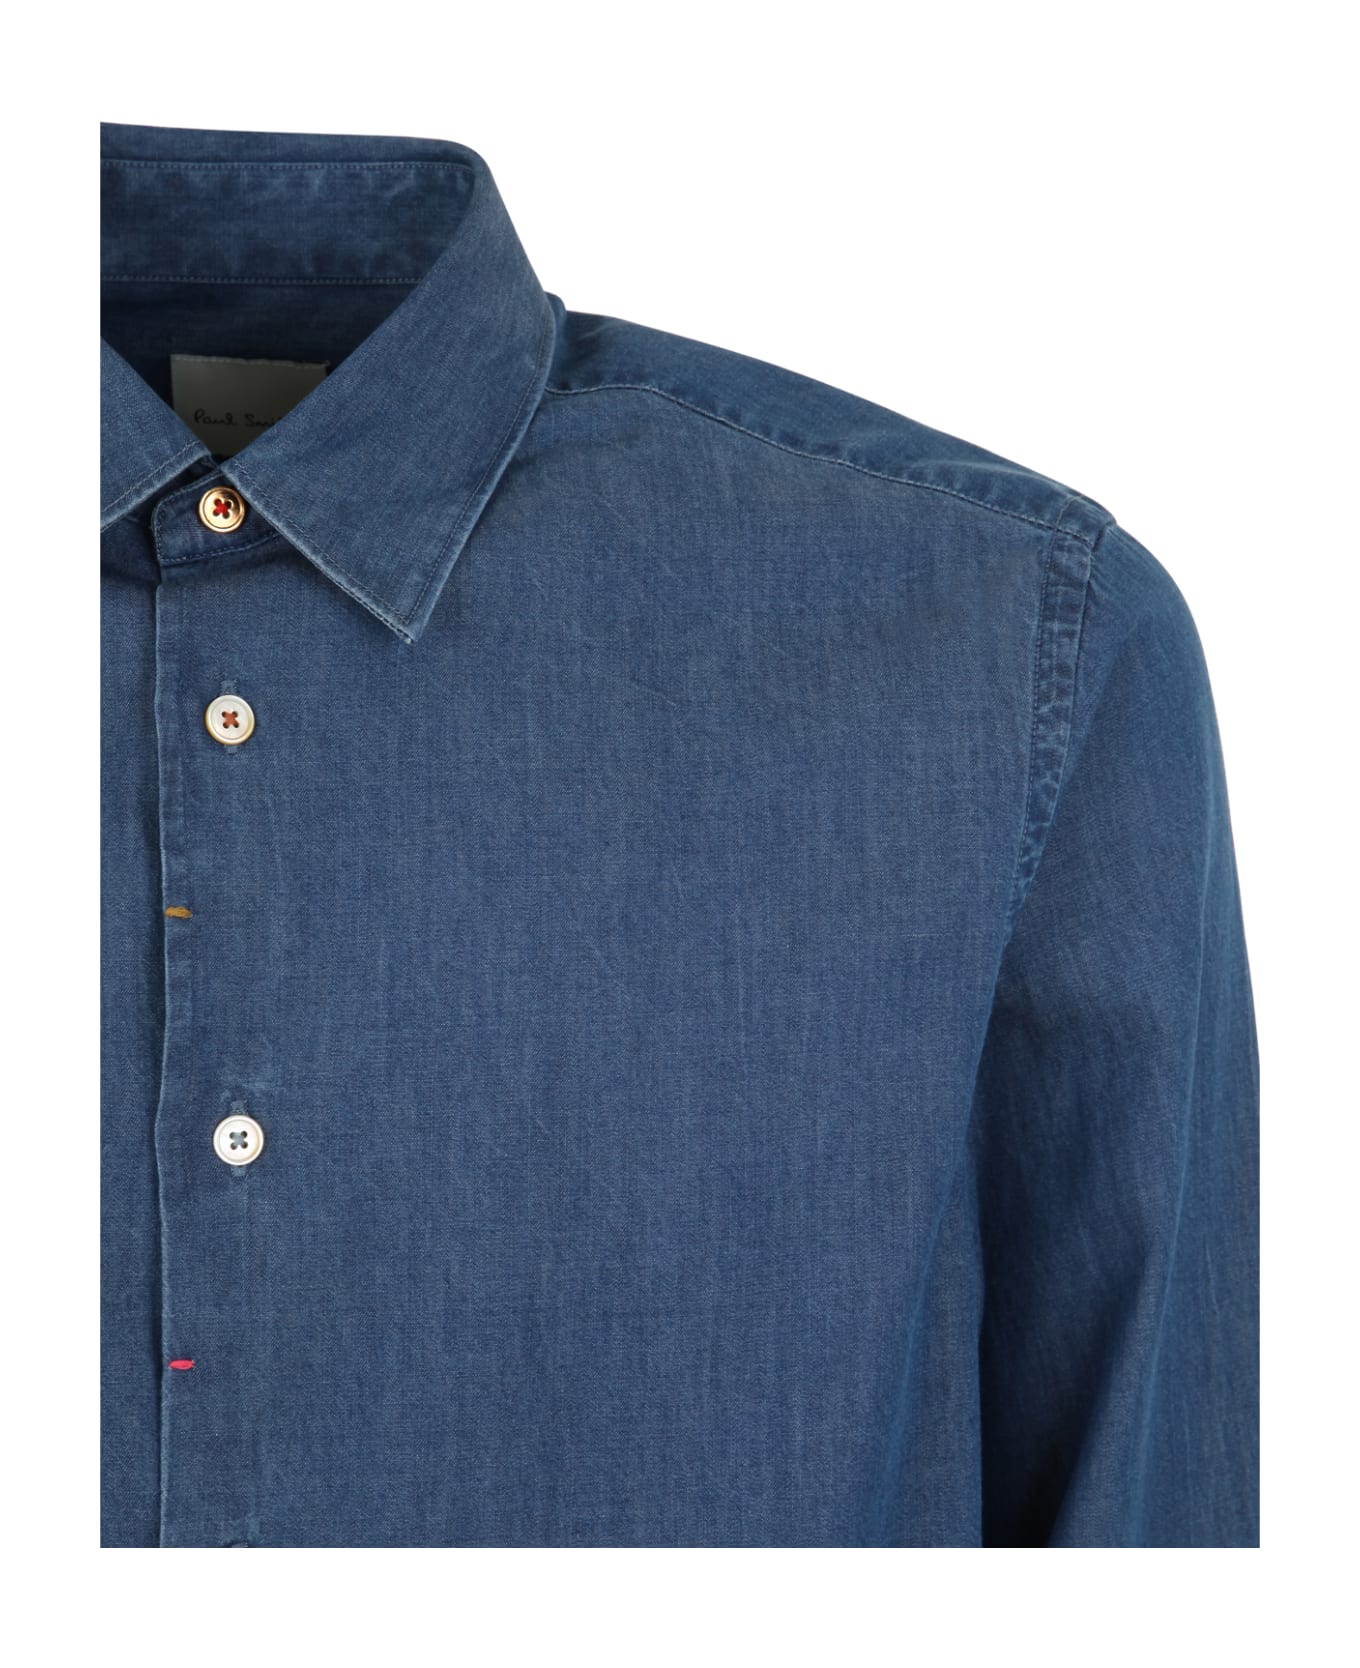 Paul Smith Mens Regular Fit Shirt - Blue シャツ